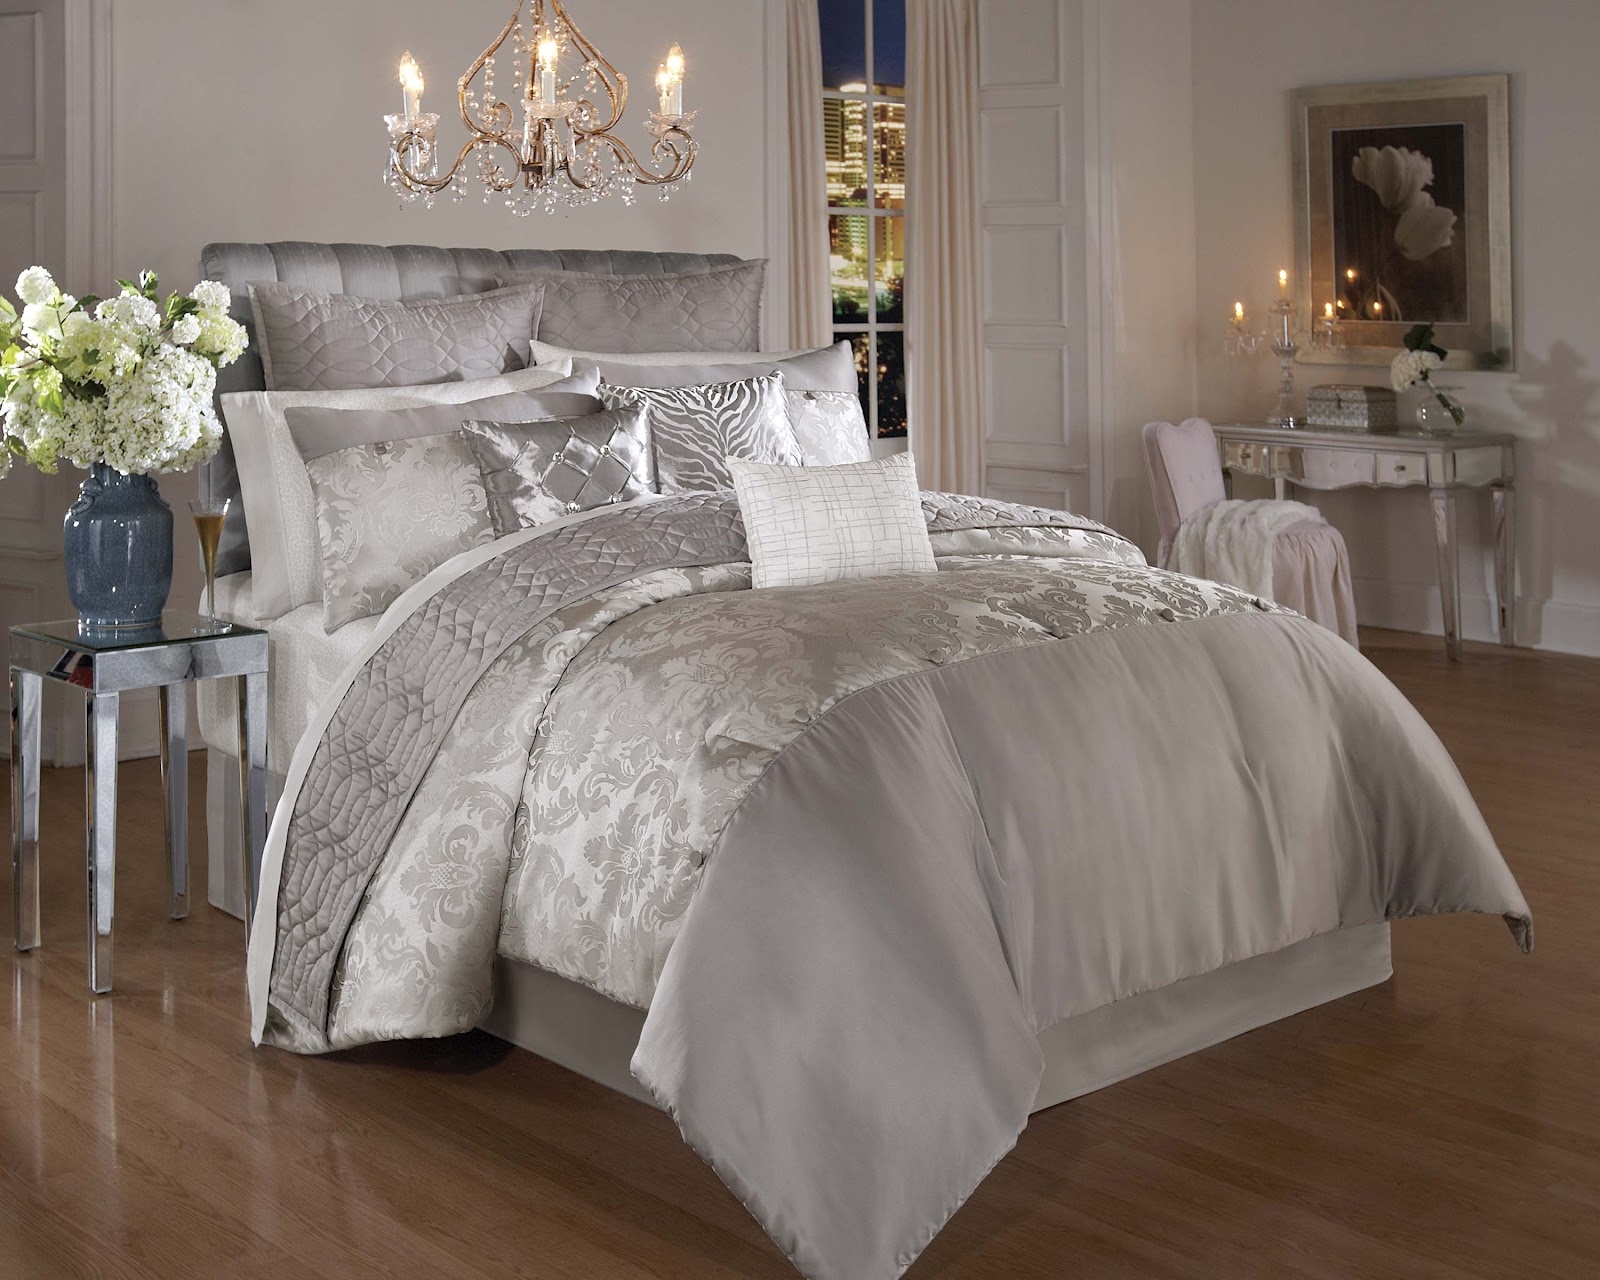 silver birch bedroom furniture